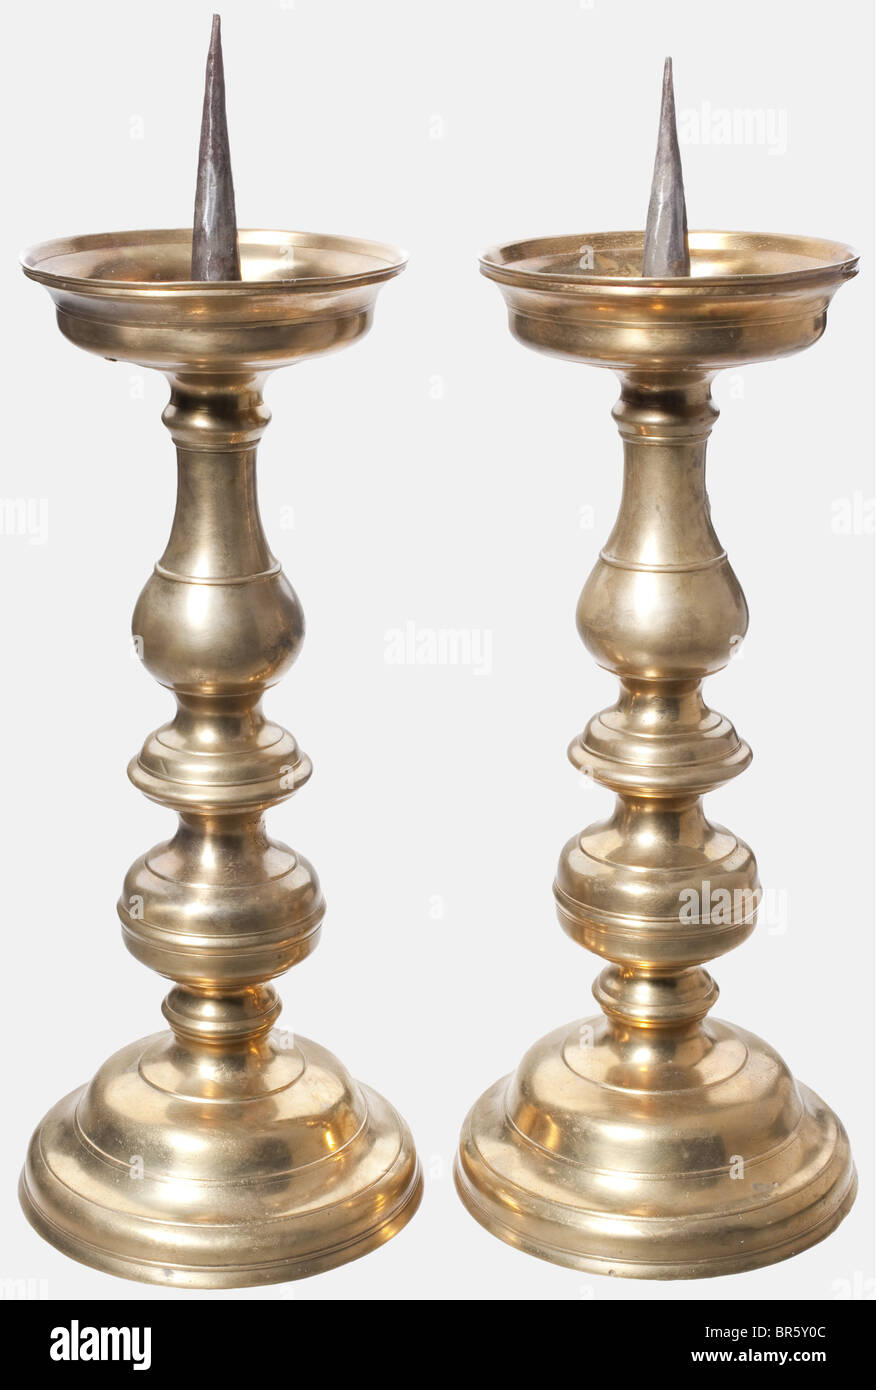 A pair of large German pricket candlesticks, circa 1600 Brass